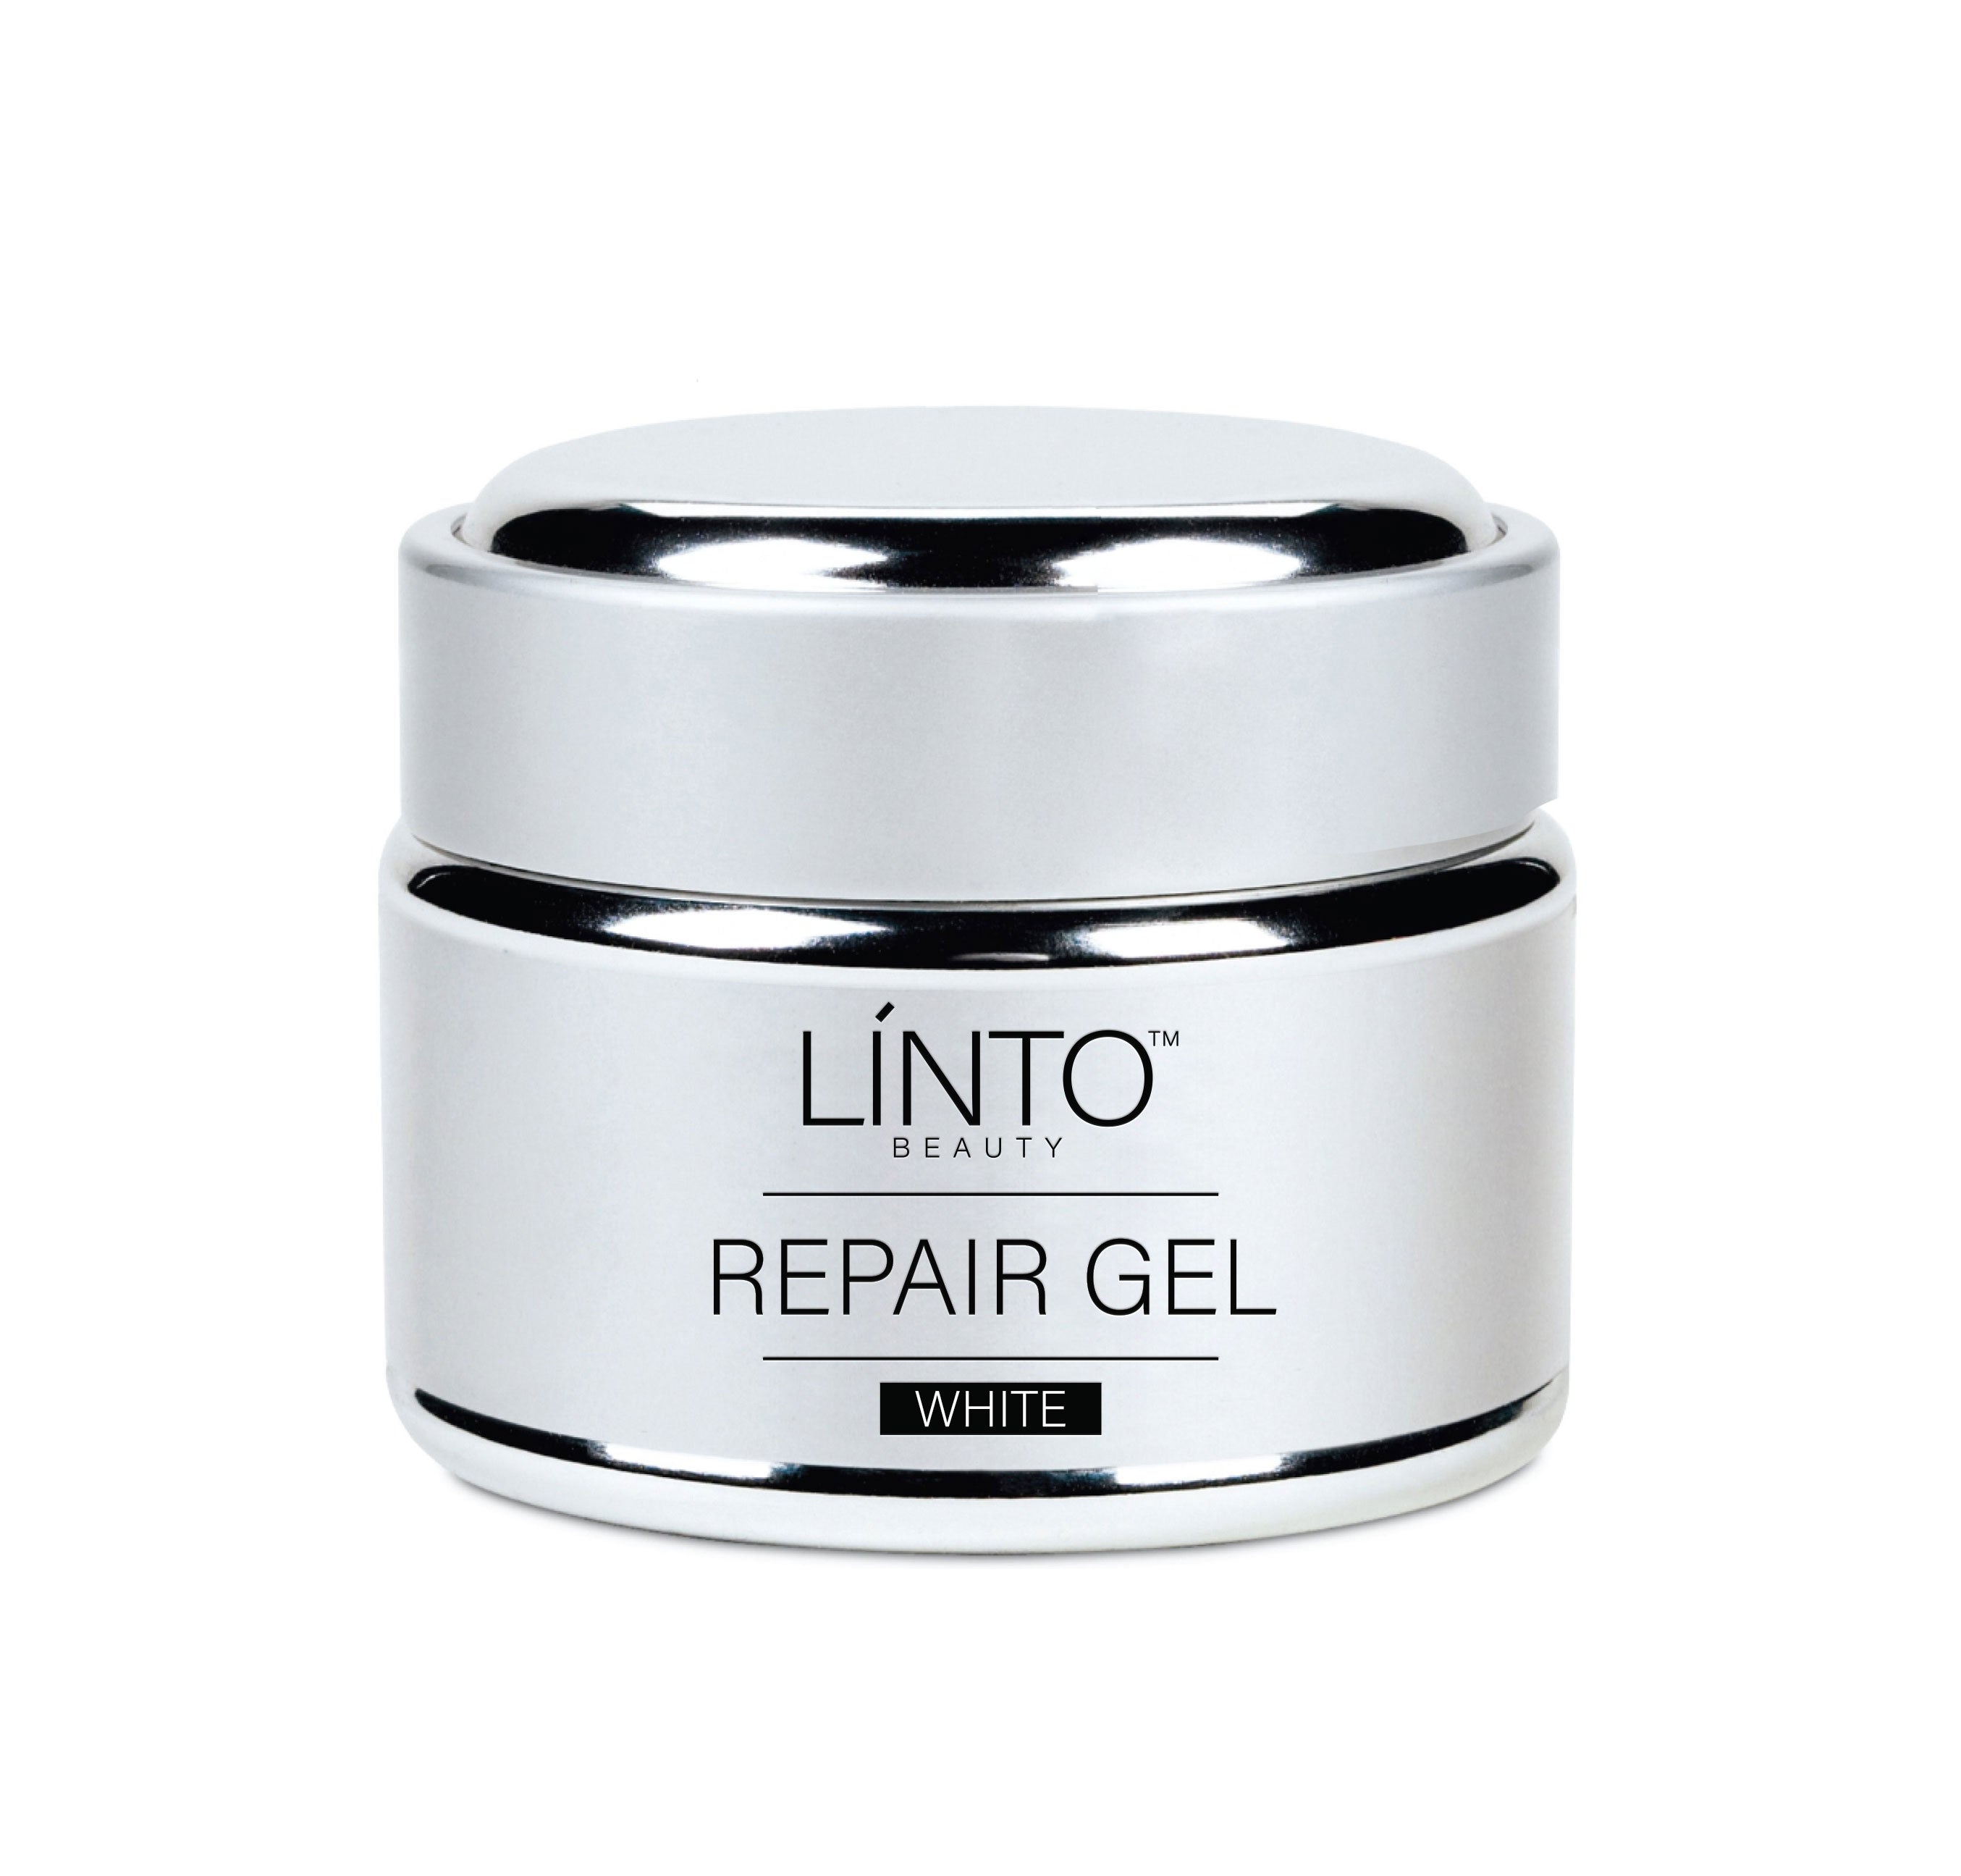 Repair gel white by LiNTO